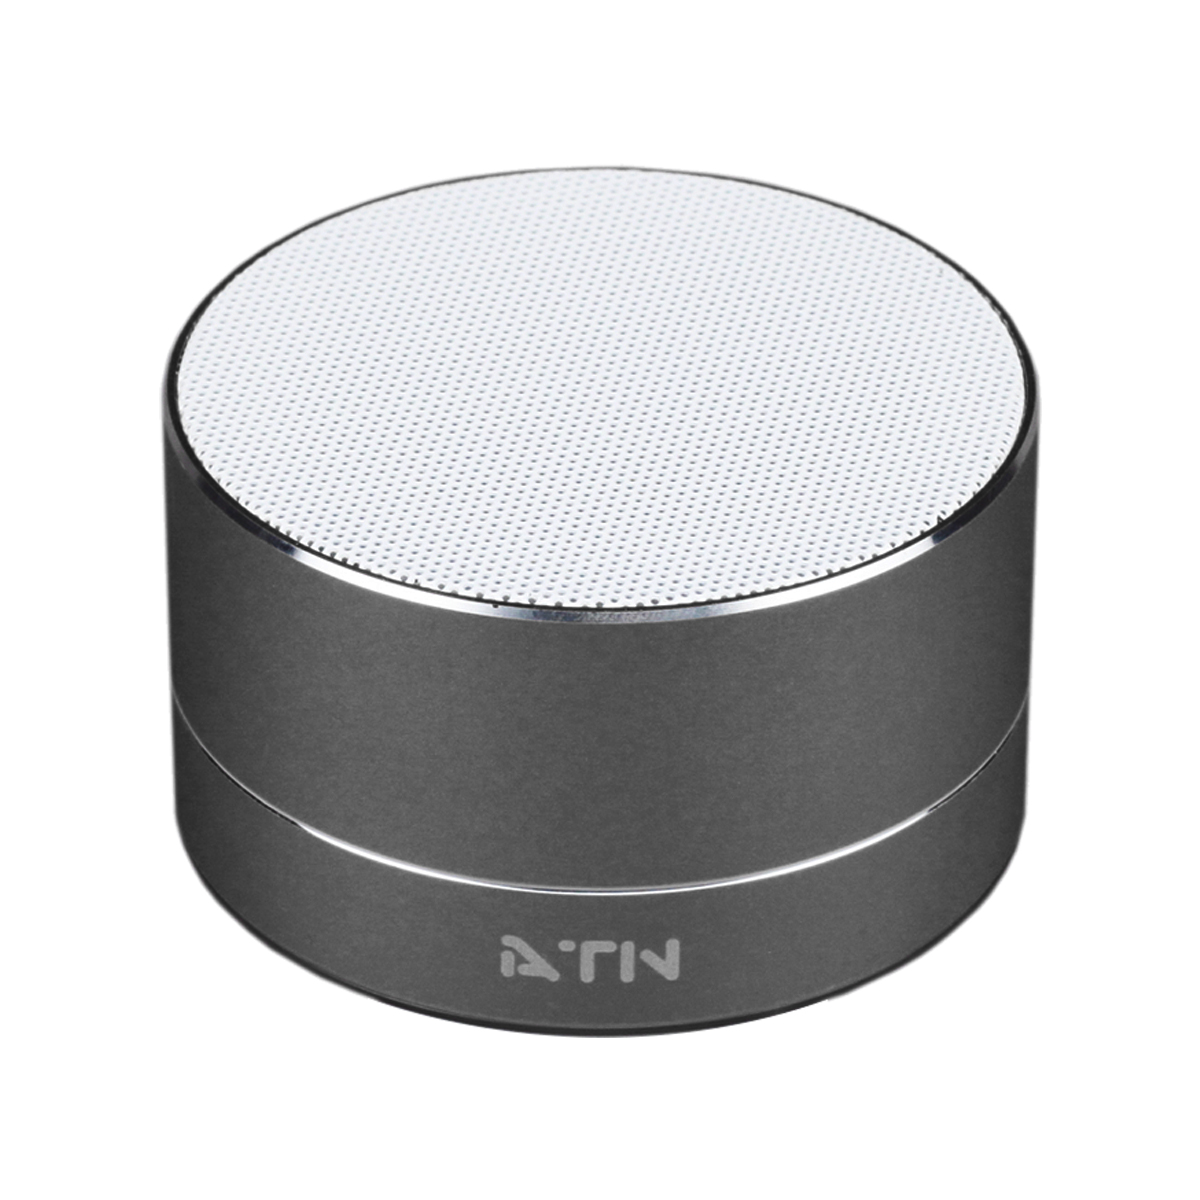 ATN A530 Bluetooth Speaker, , large image number 1